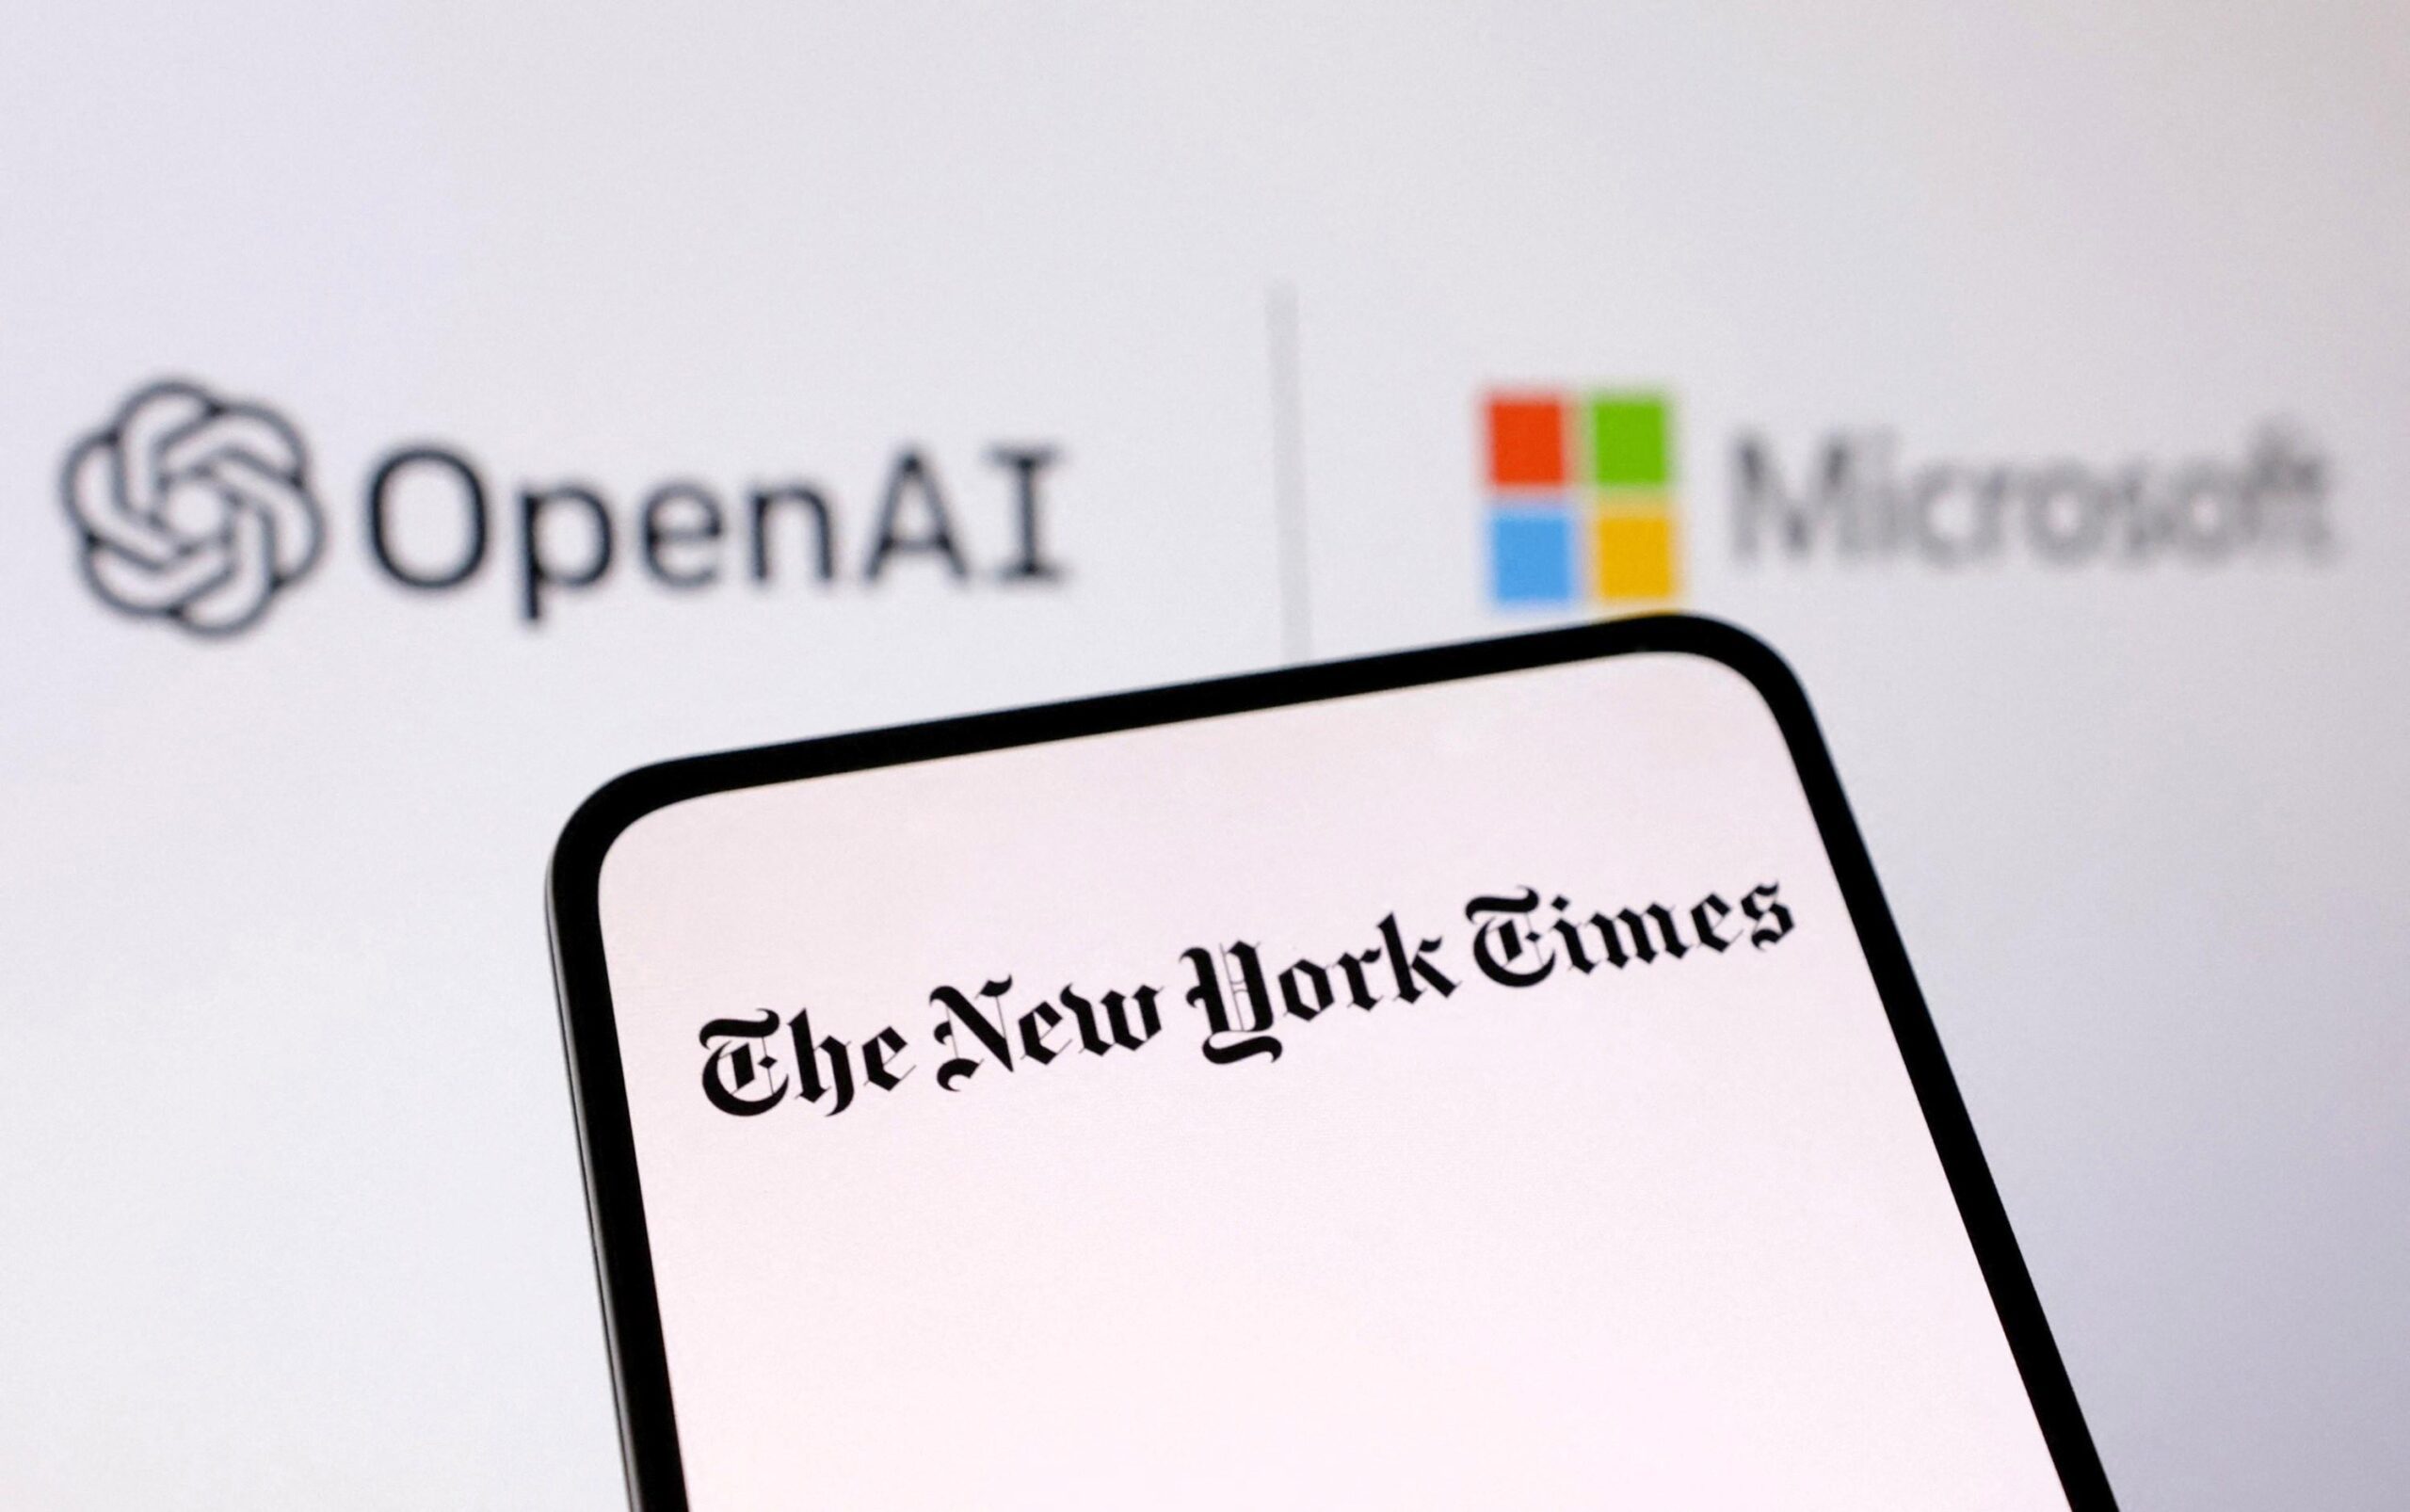 New York Times, telif hakkı nedeniyle OpenAI ve Microsoft’a dava açtı